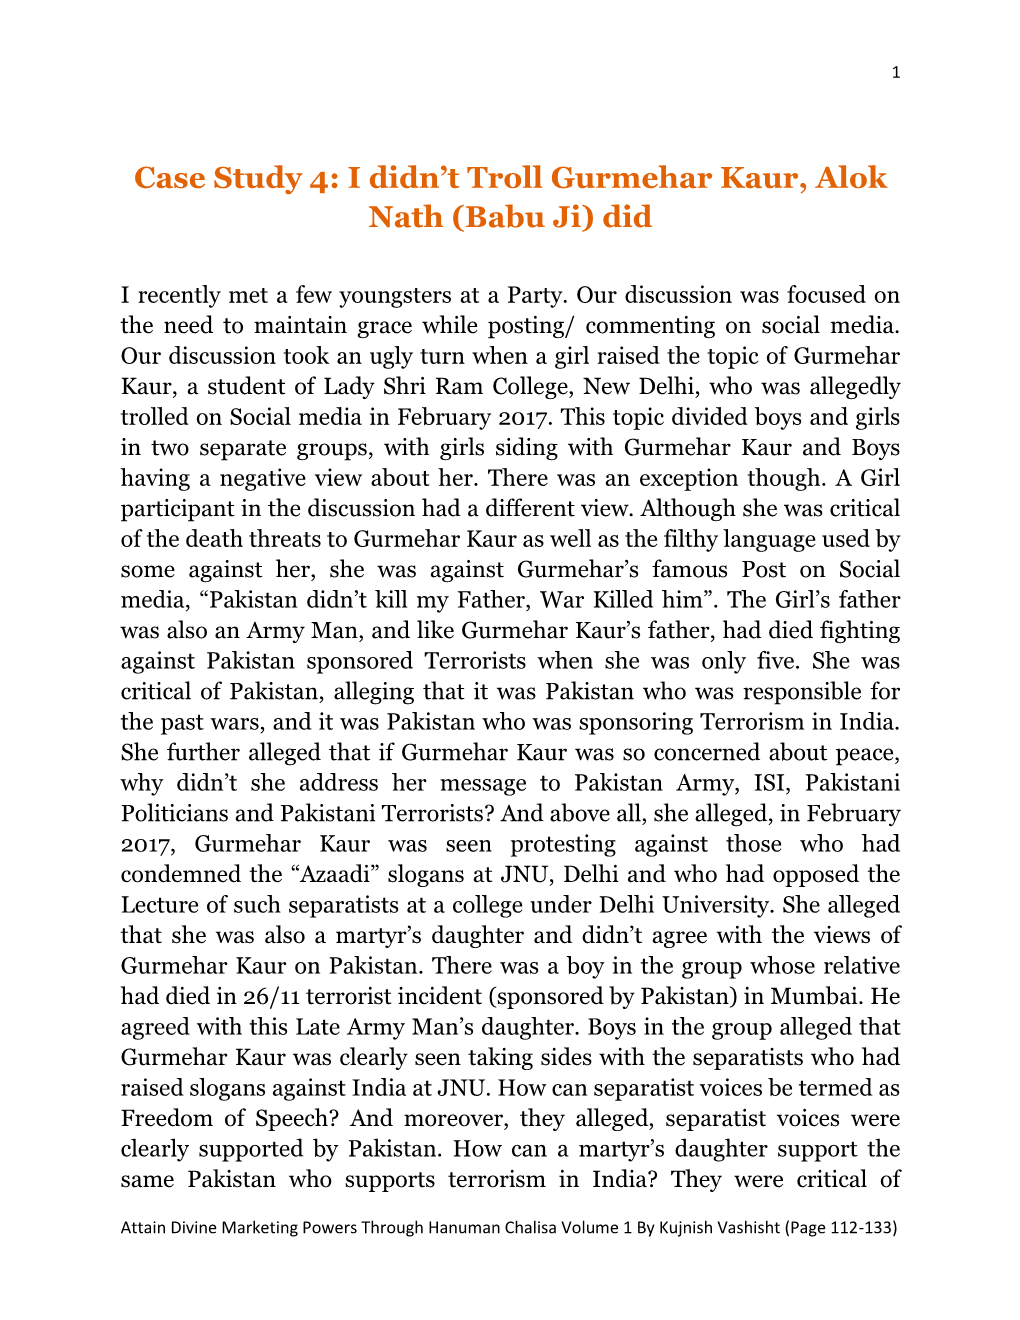 Case Study 4: I Didn't Troll Gurmehar Kaur, Alok Nath (Babu Ji)